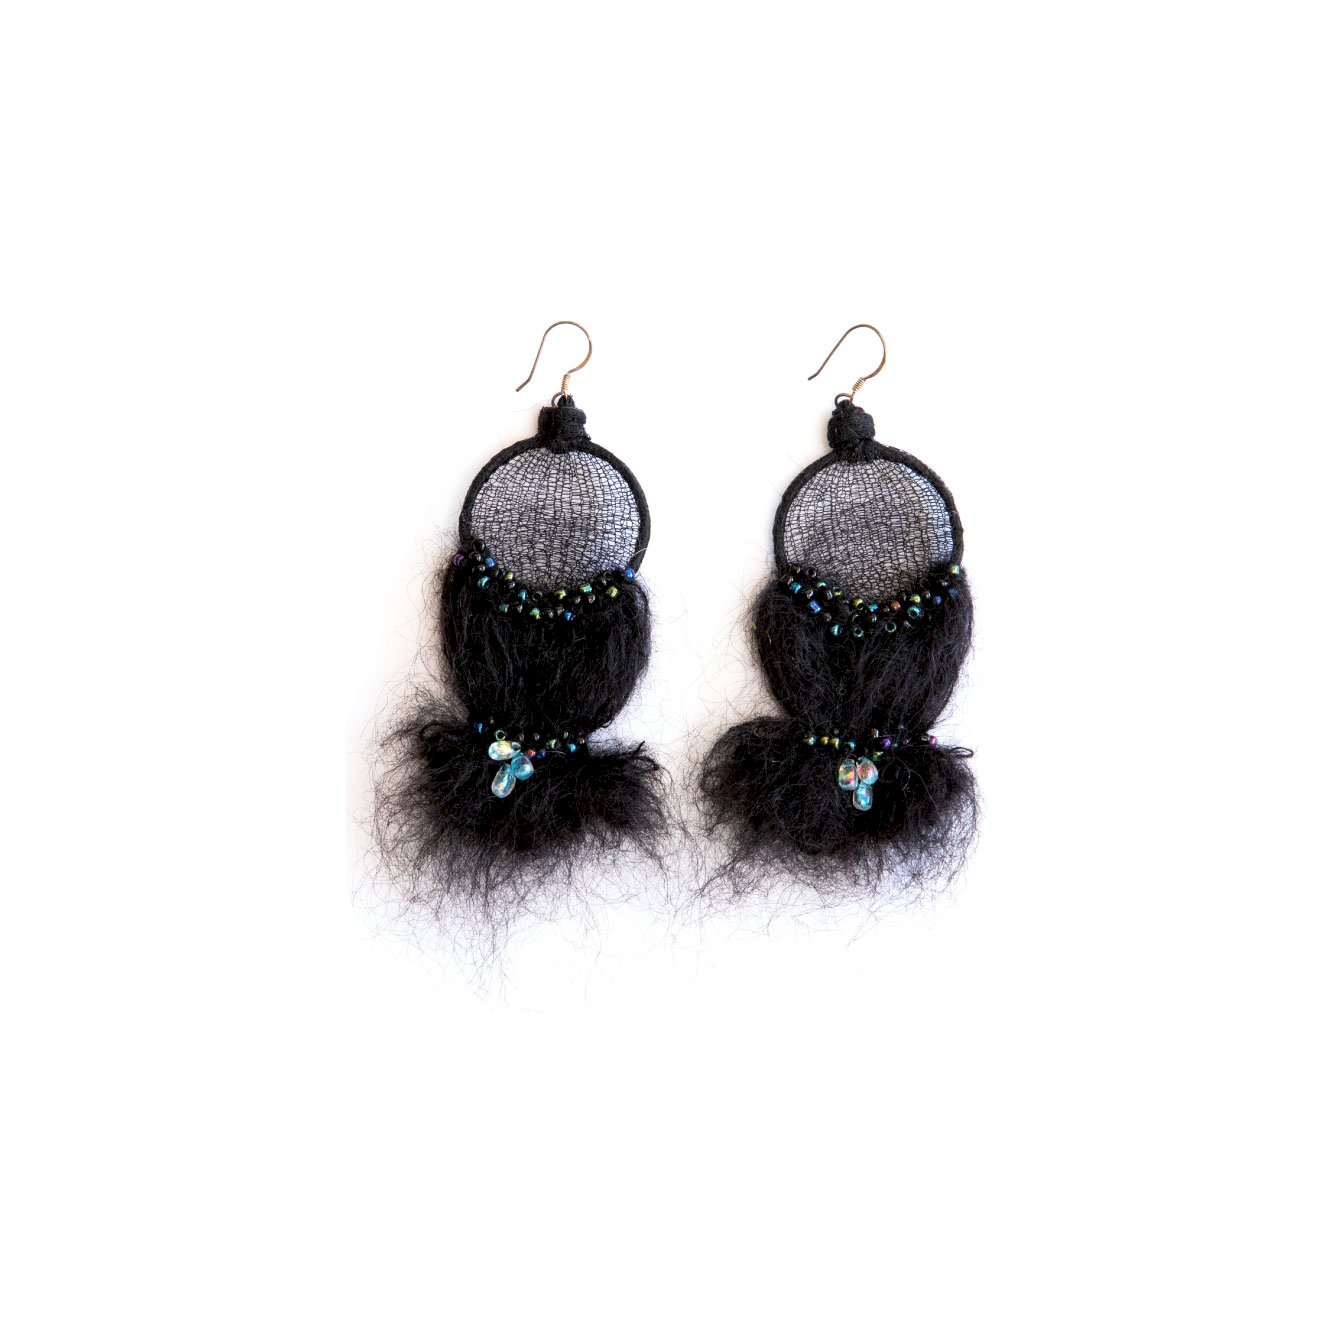 Earrings made of silver hooks, cotton net, mohair and Miyuki glass beads